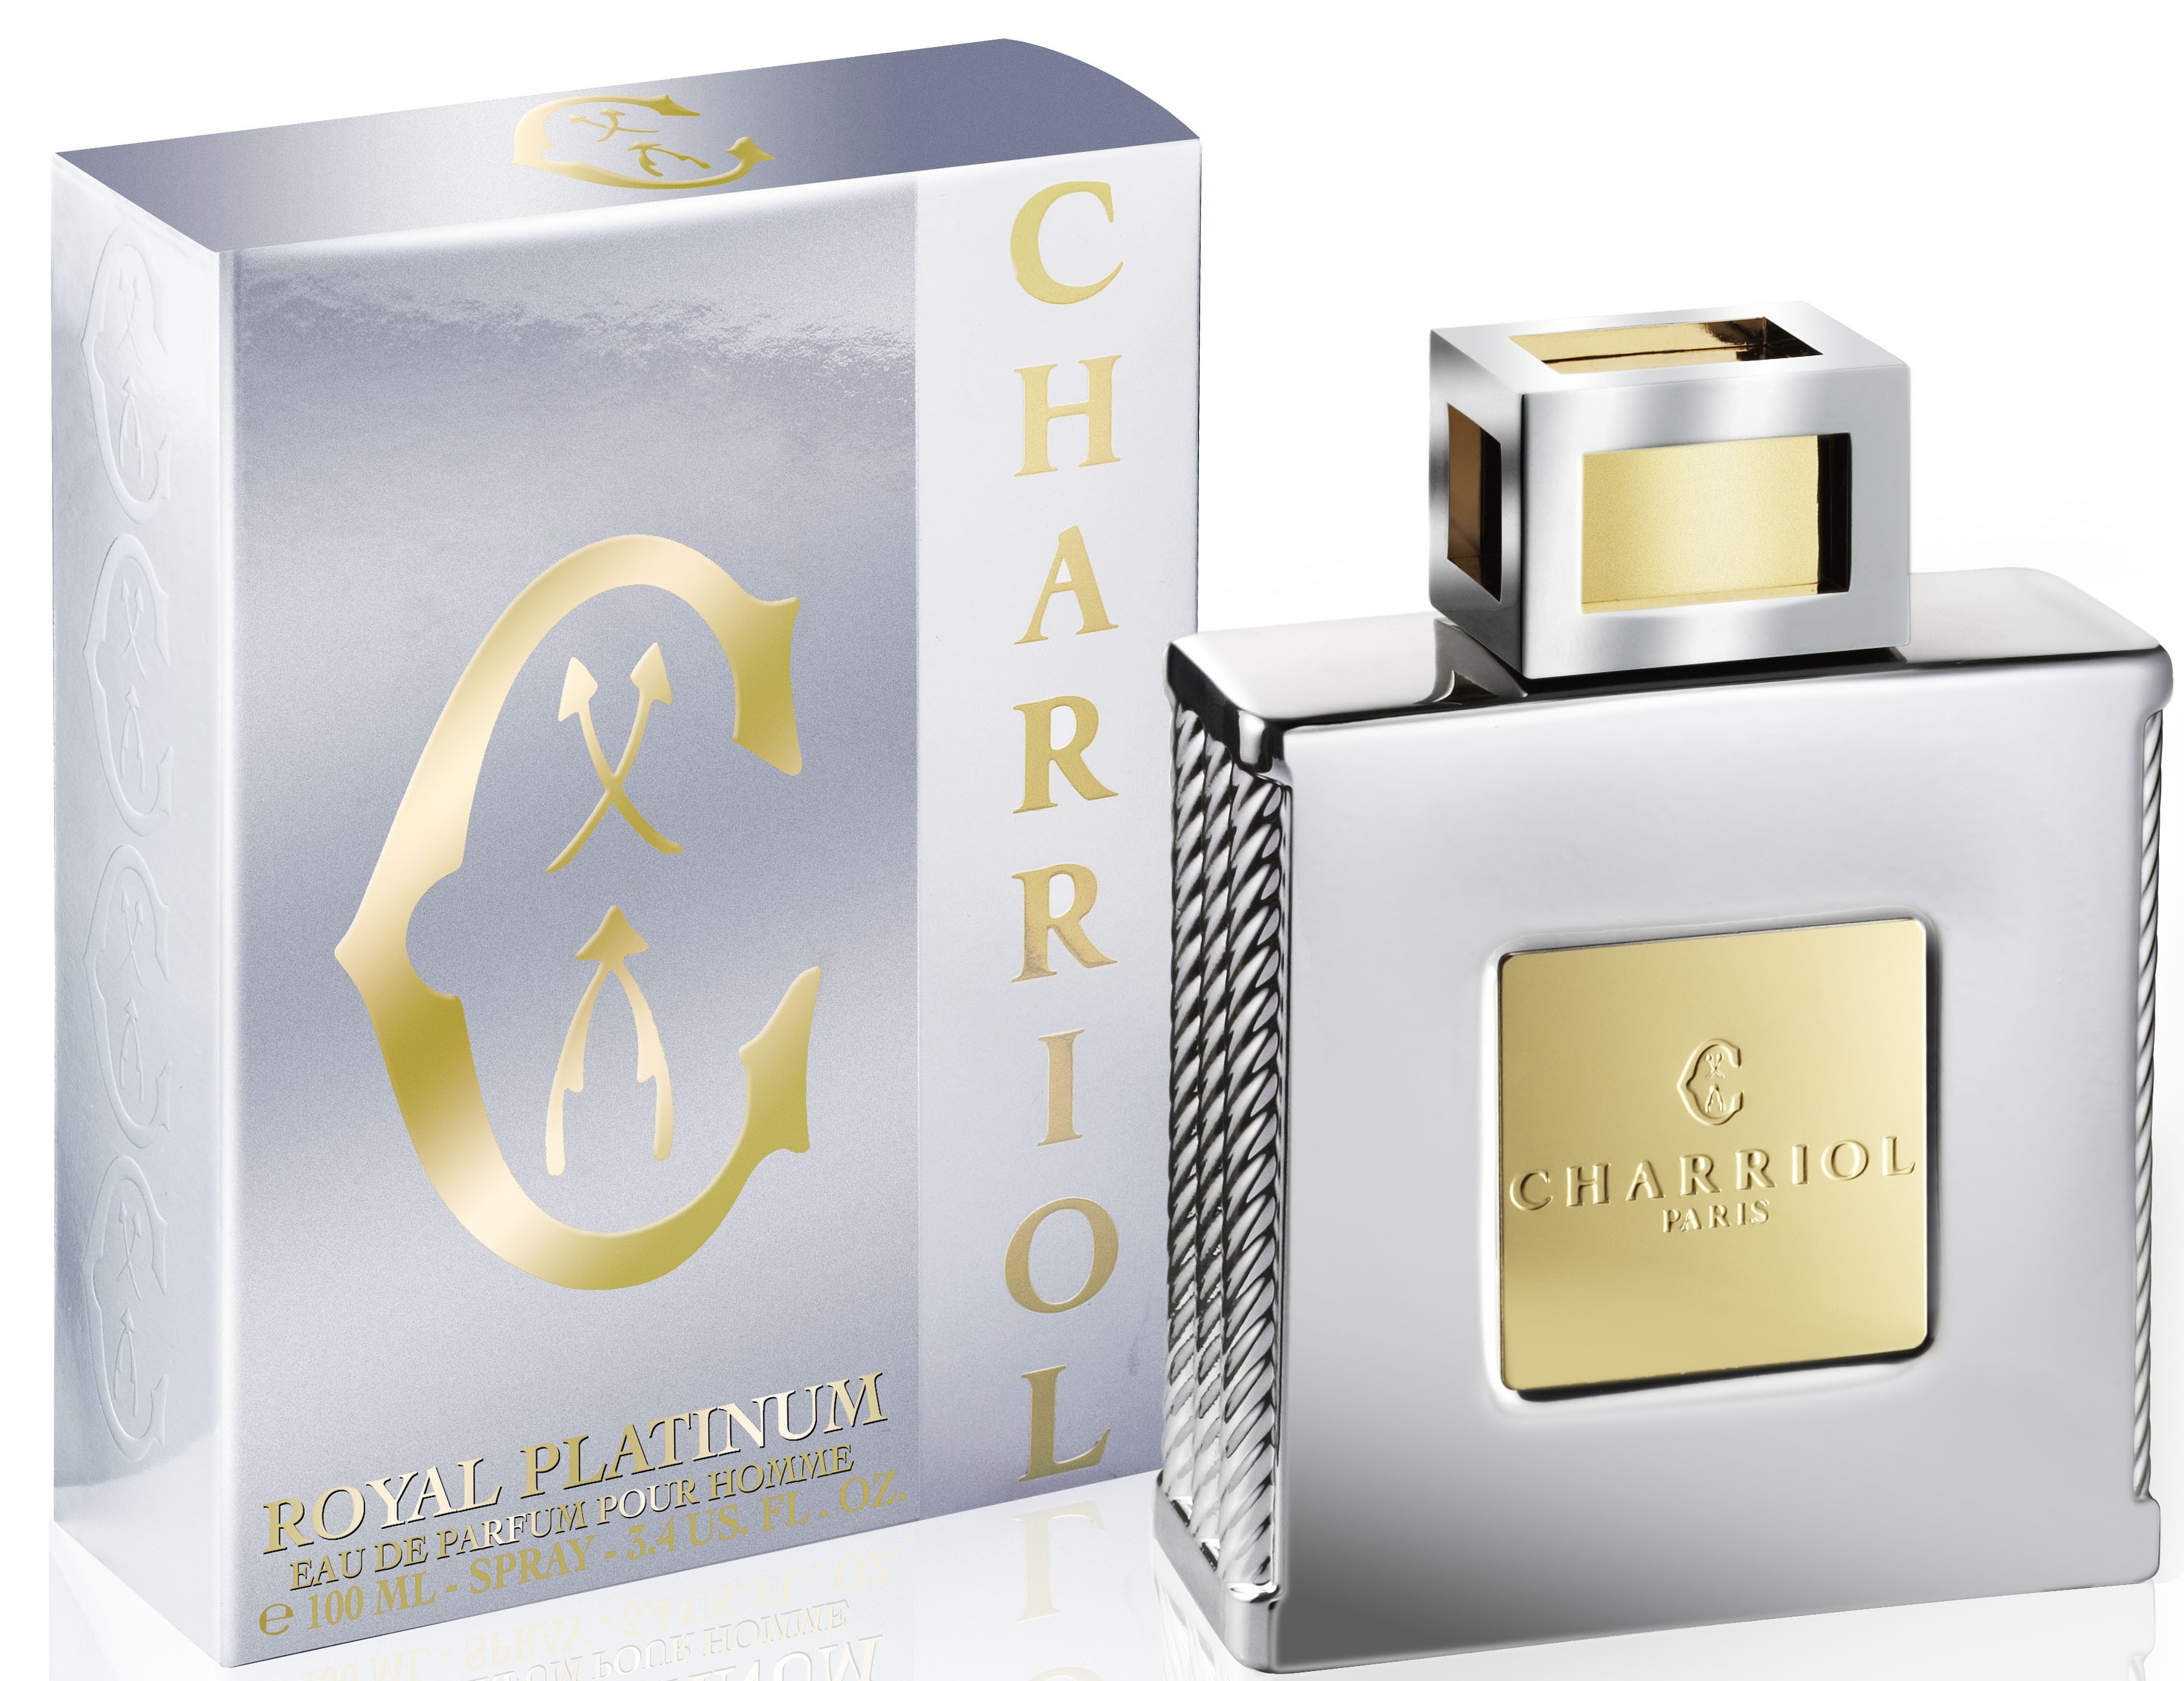 Charriol Royal Platinum